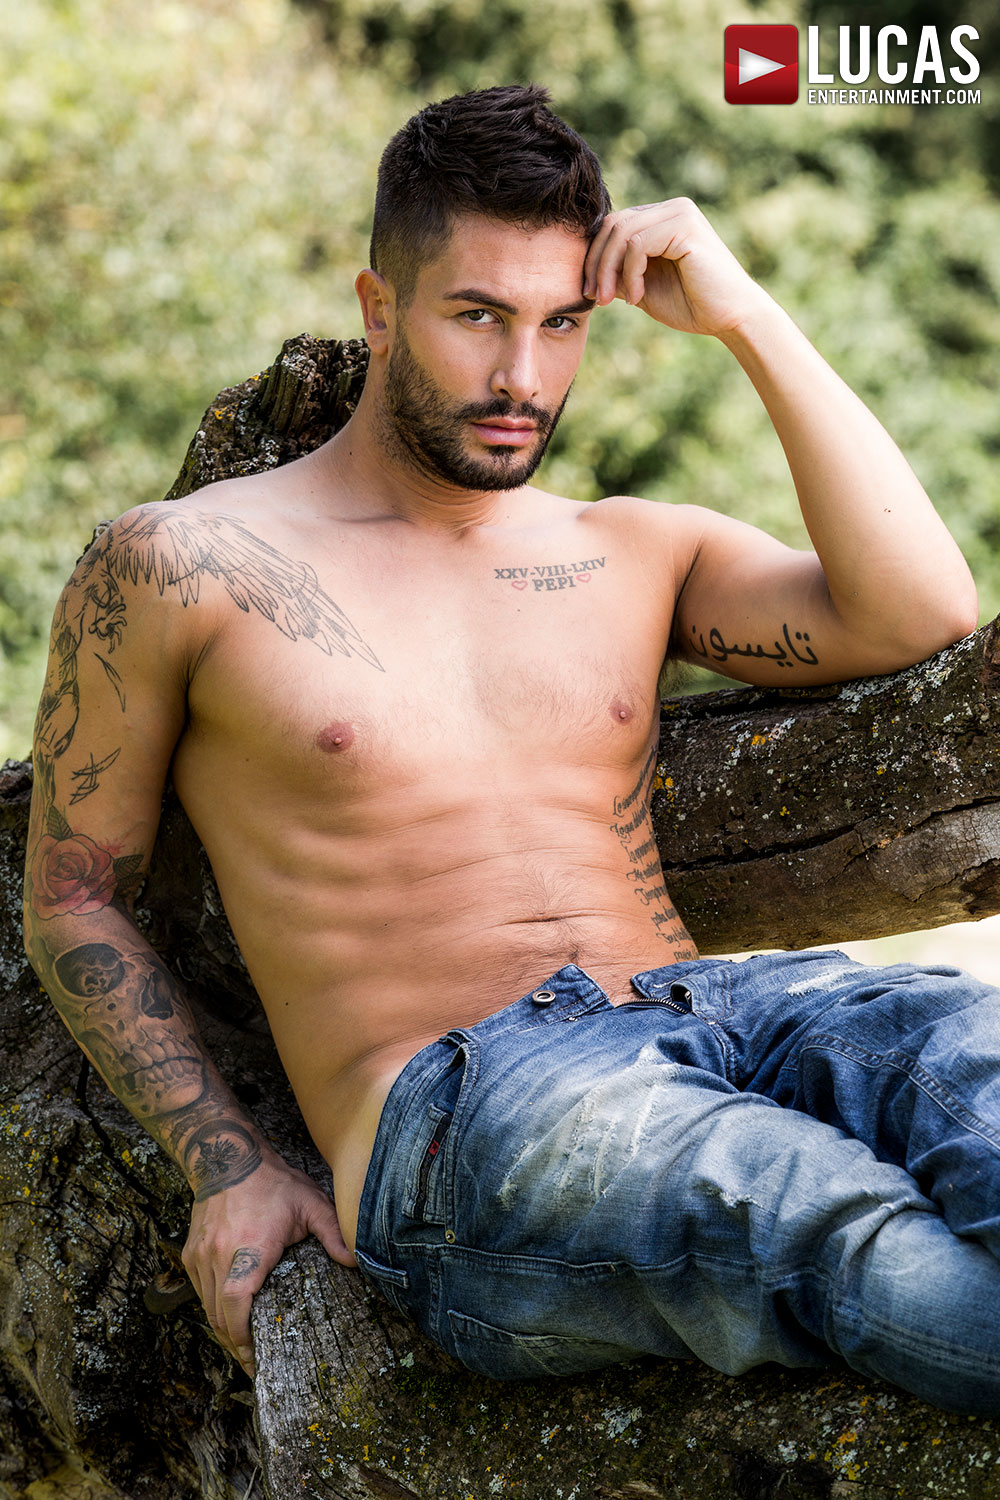 Andrea Suarez - Gay Model - Lucas Raunch